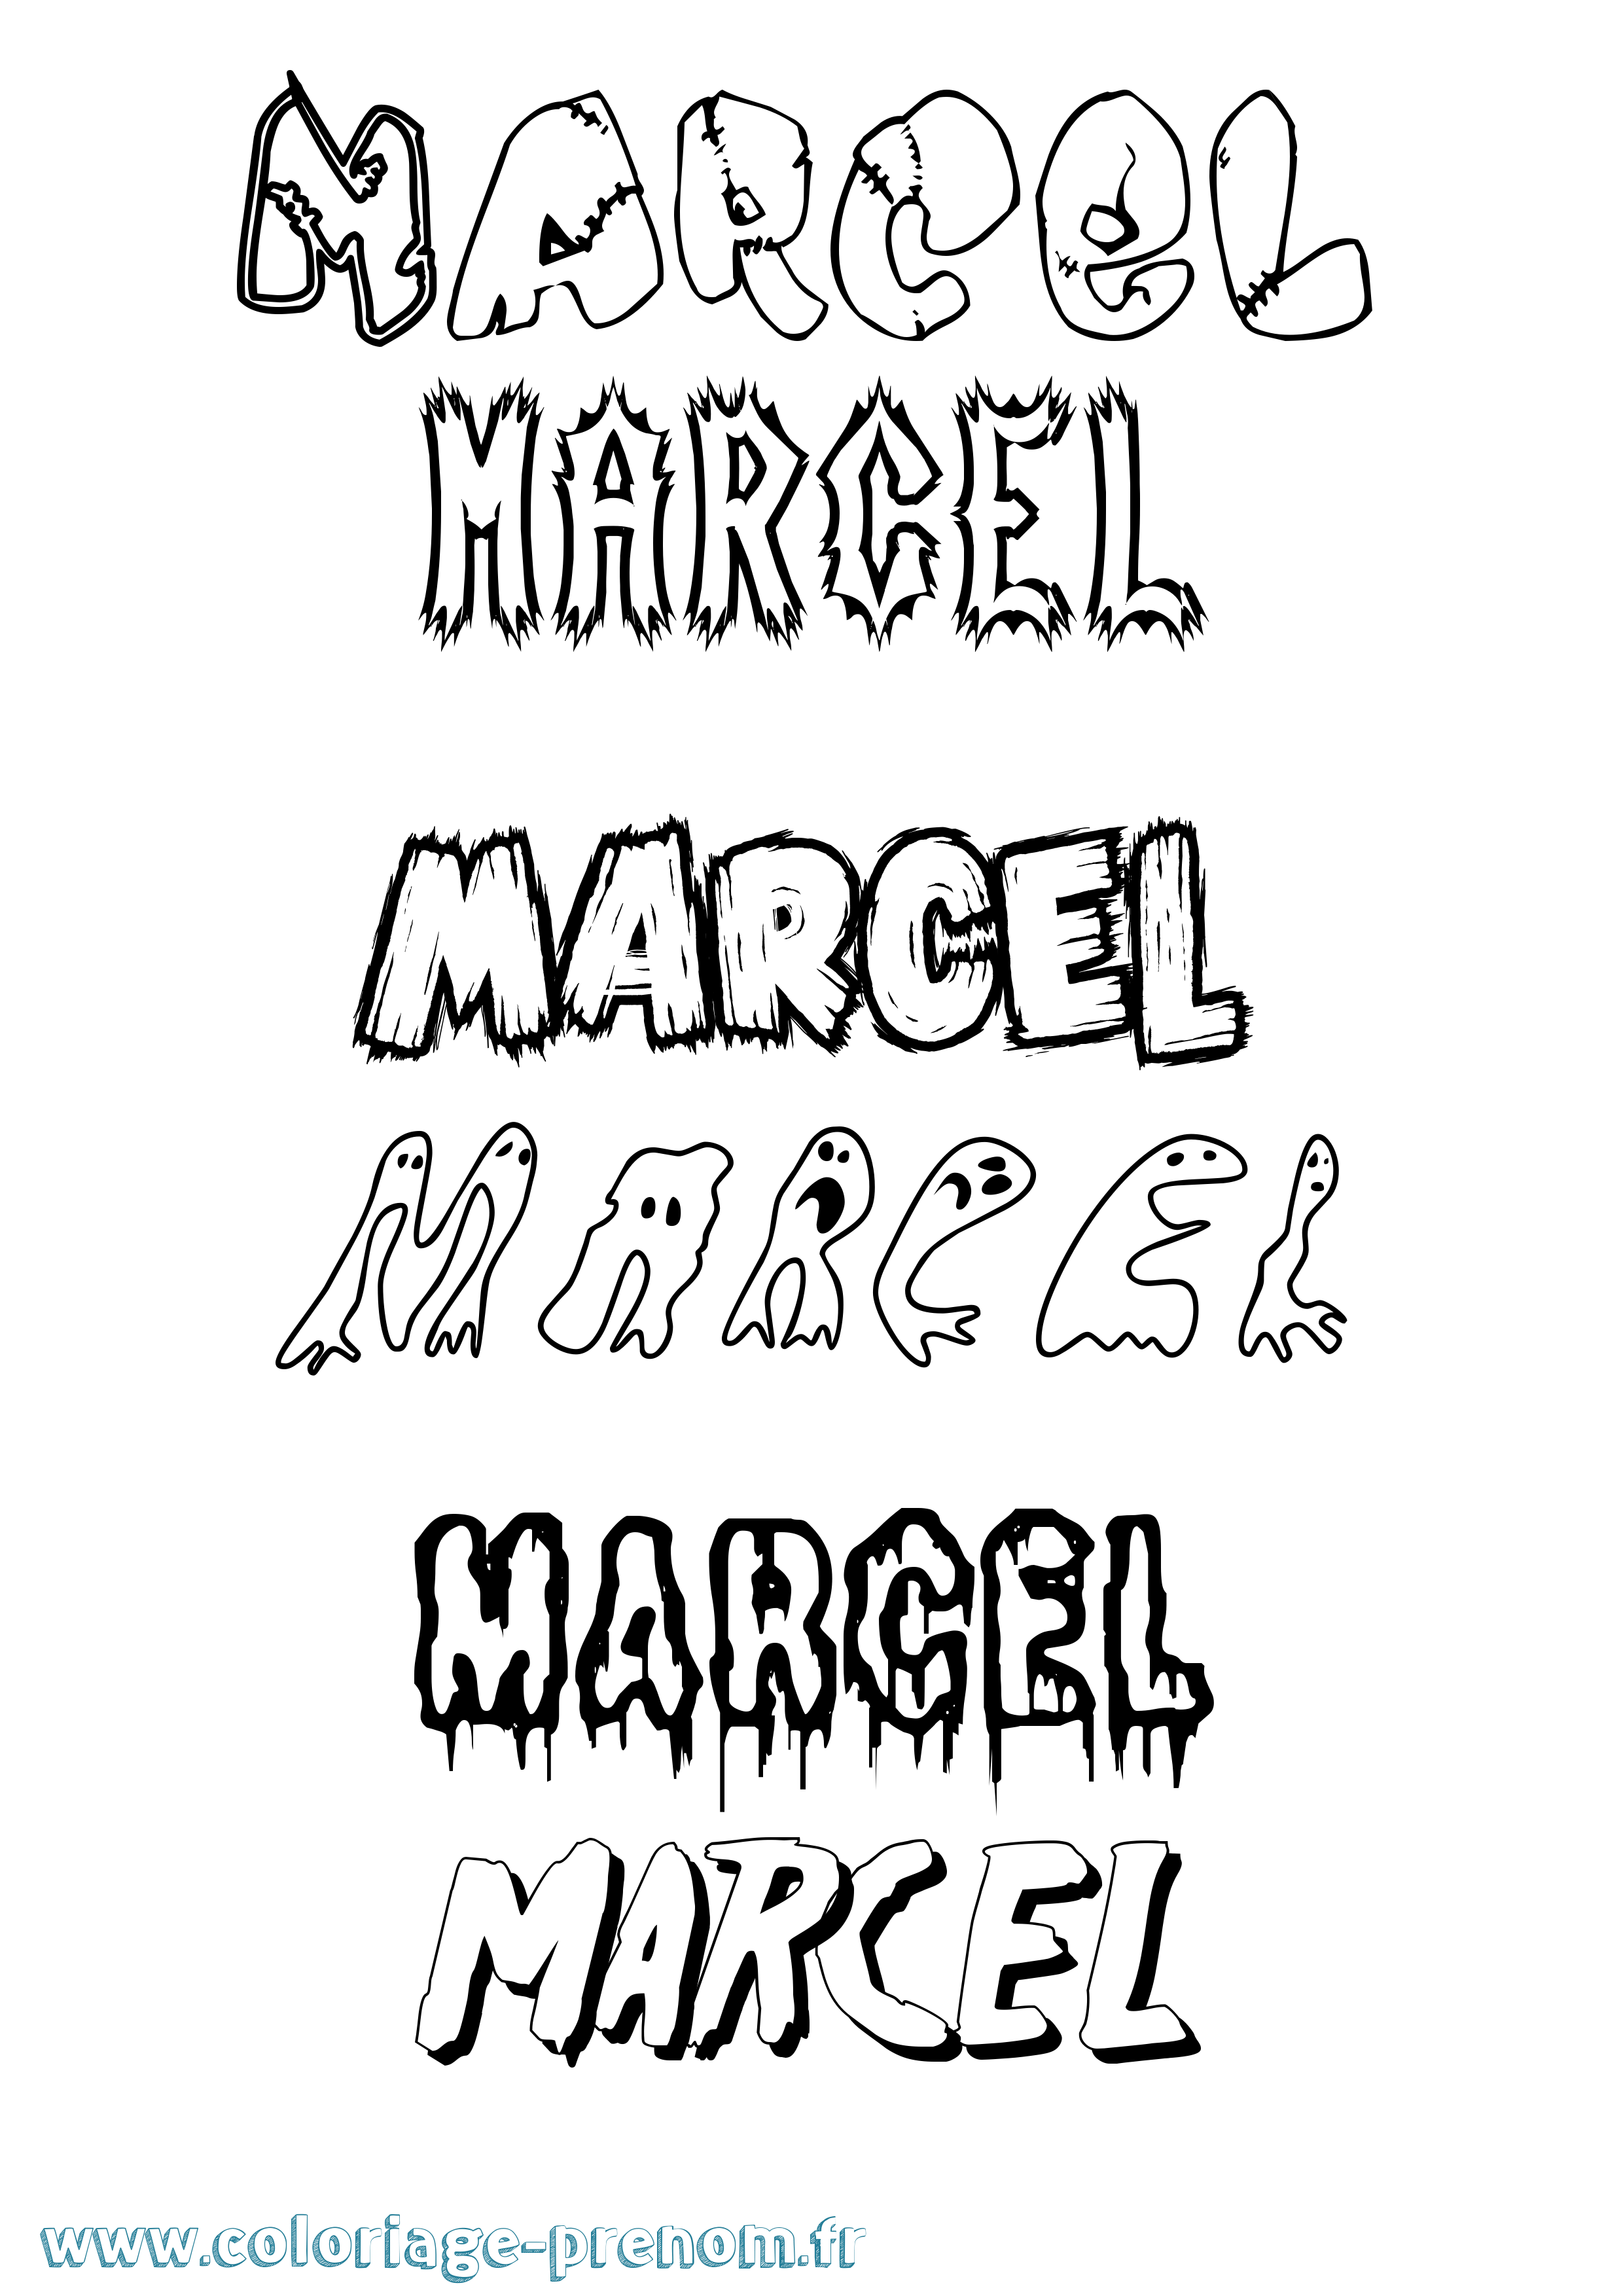 Coloriage prénom Marcel